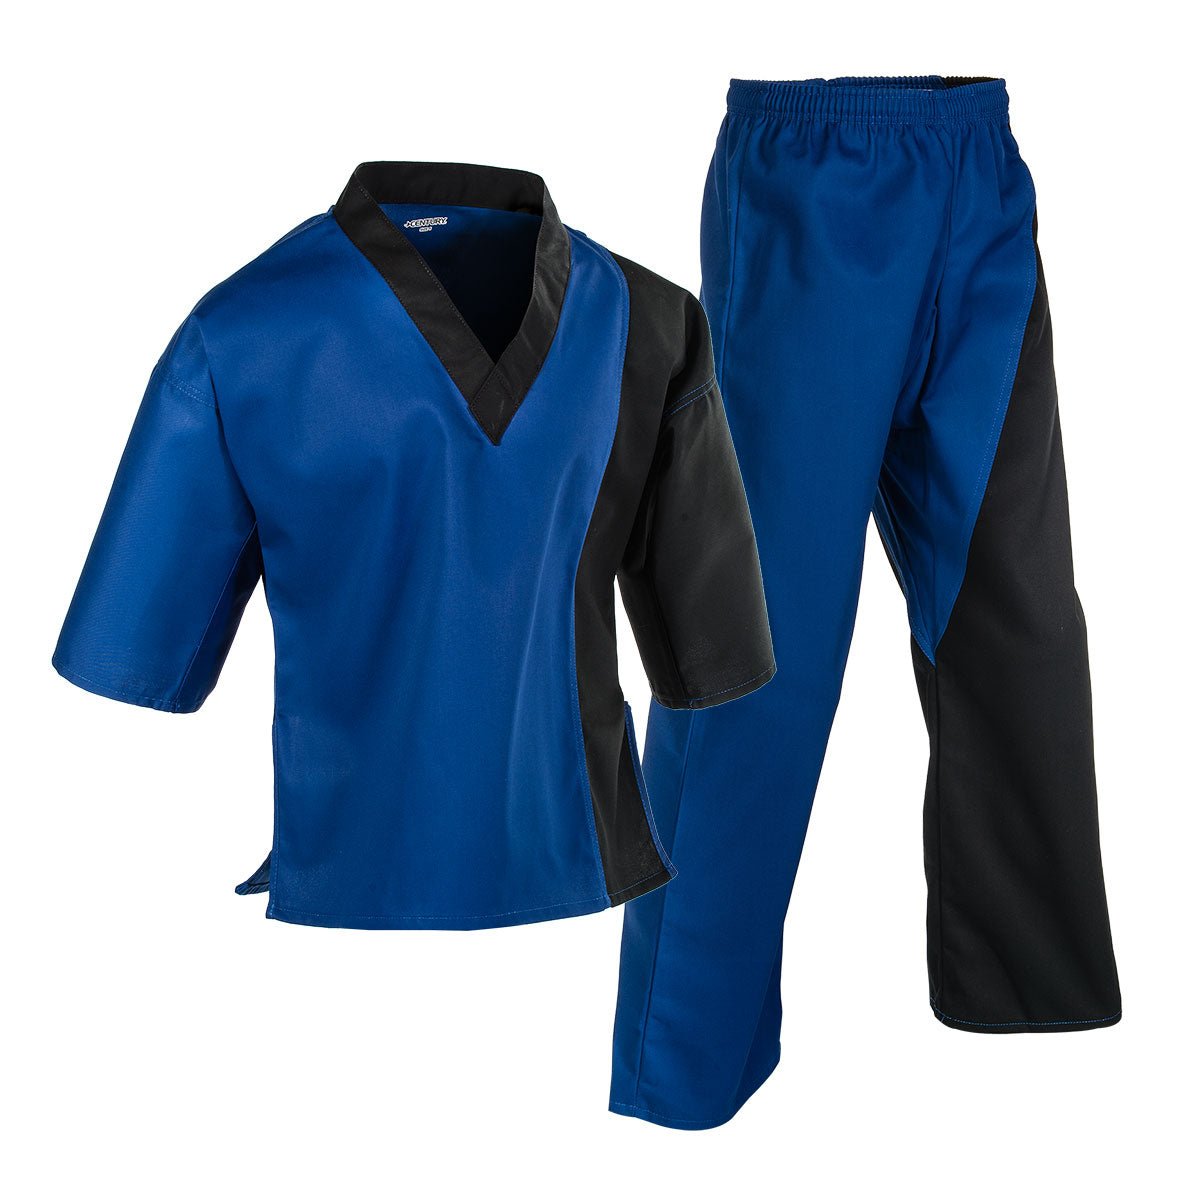 7 oz. Pullover Colorblock Splice Team Uniform Black/Blue